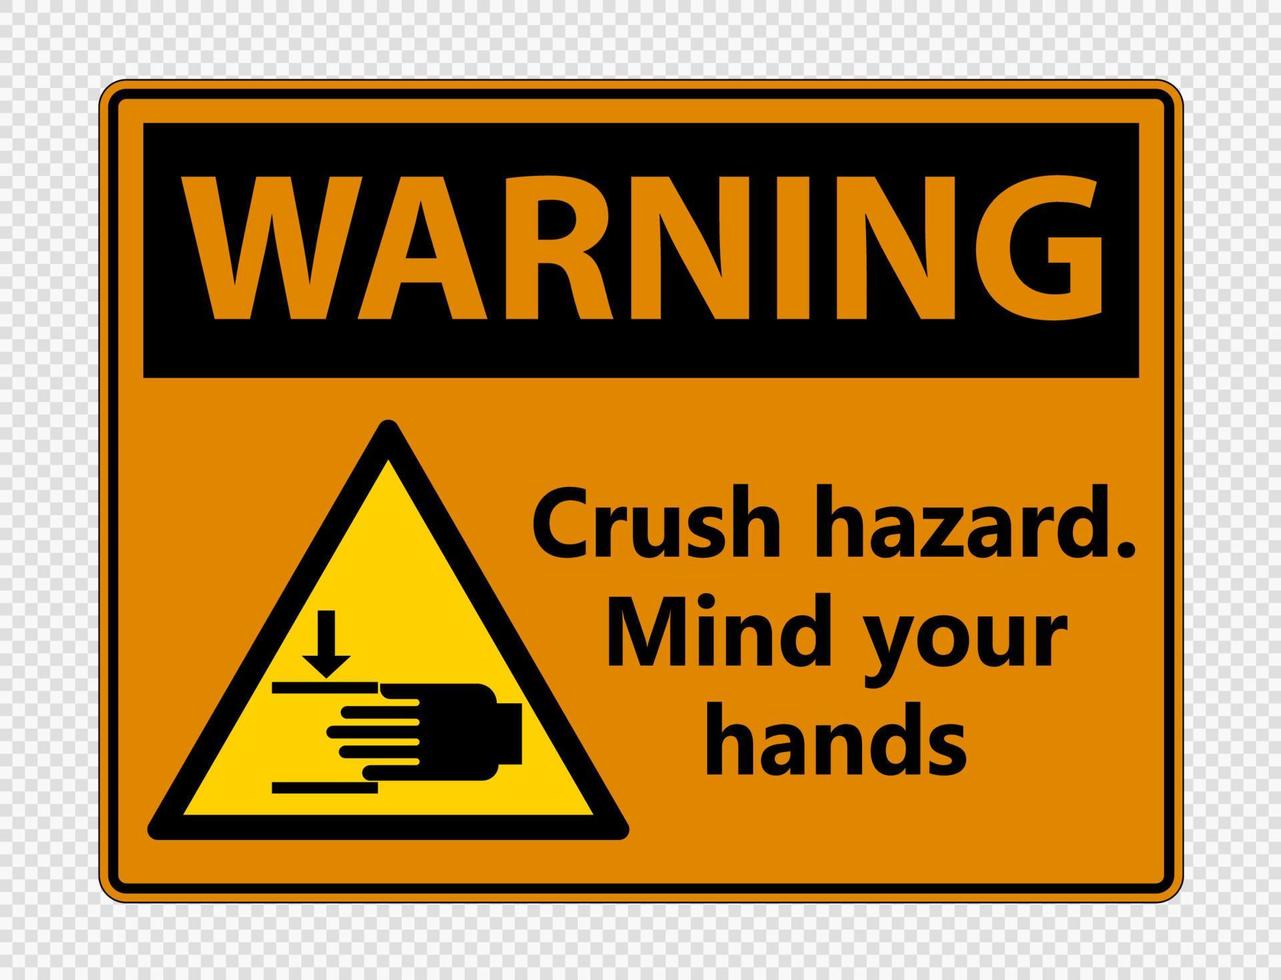 Warning crush hazard.Mind your hands Sign on transparent background vector